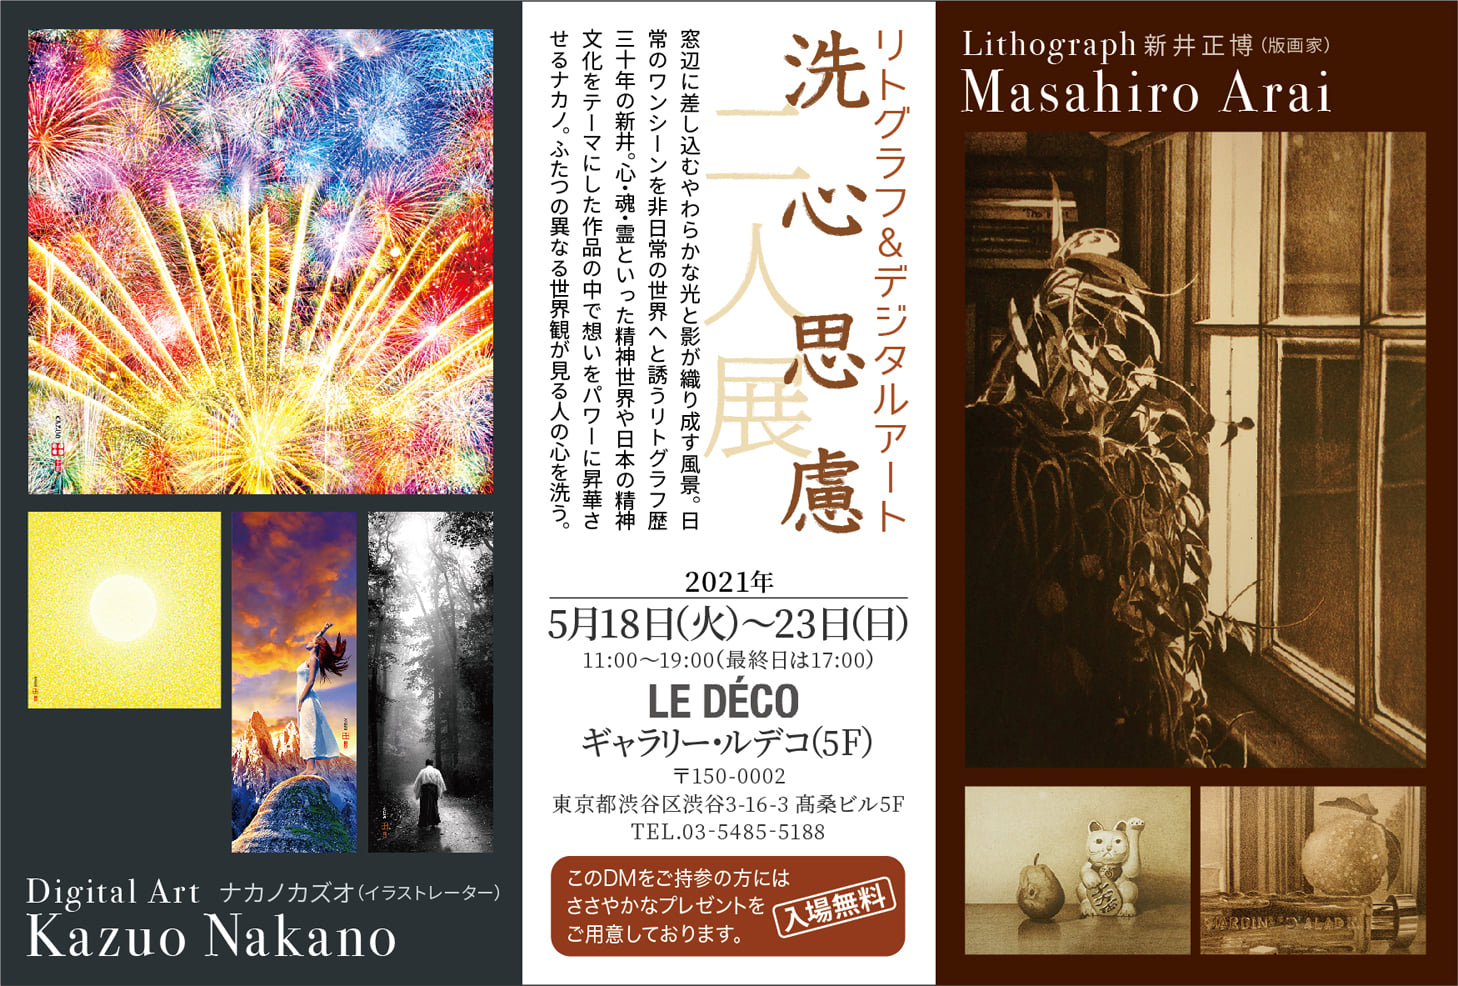 Exhibition May 18-23, 2021, in Shibuya